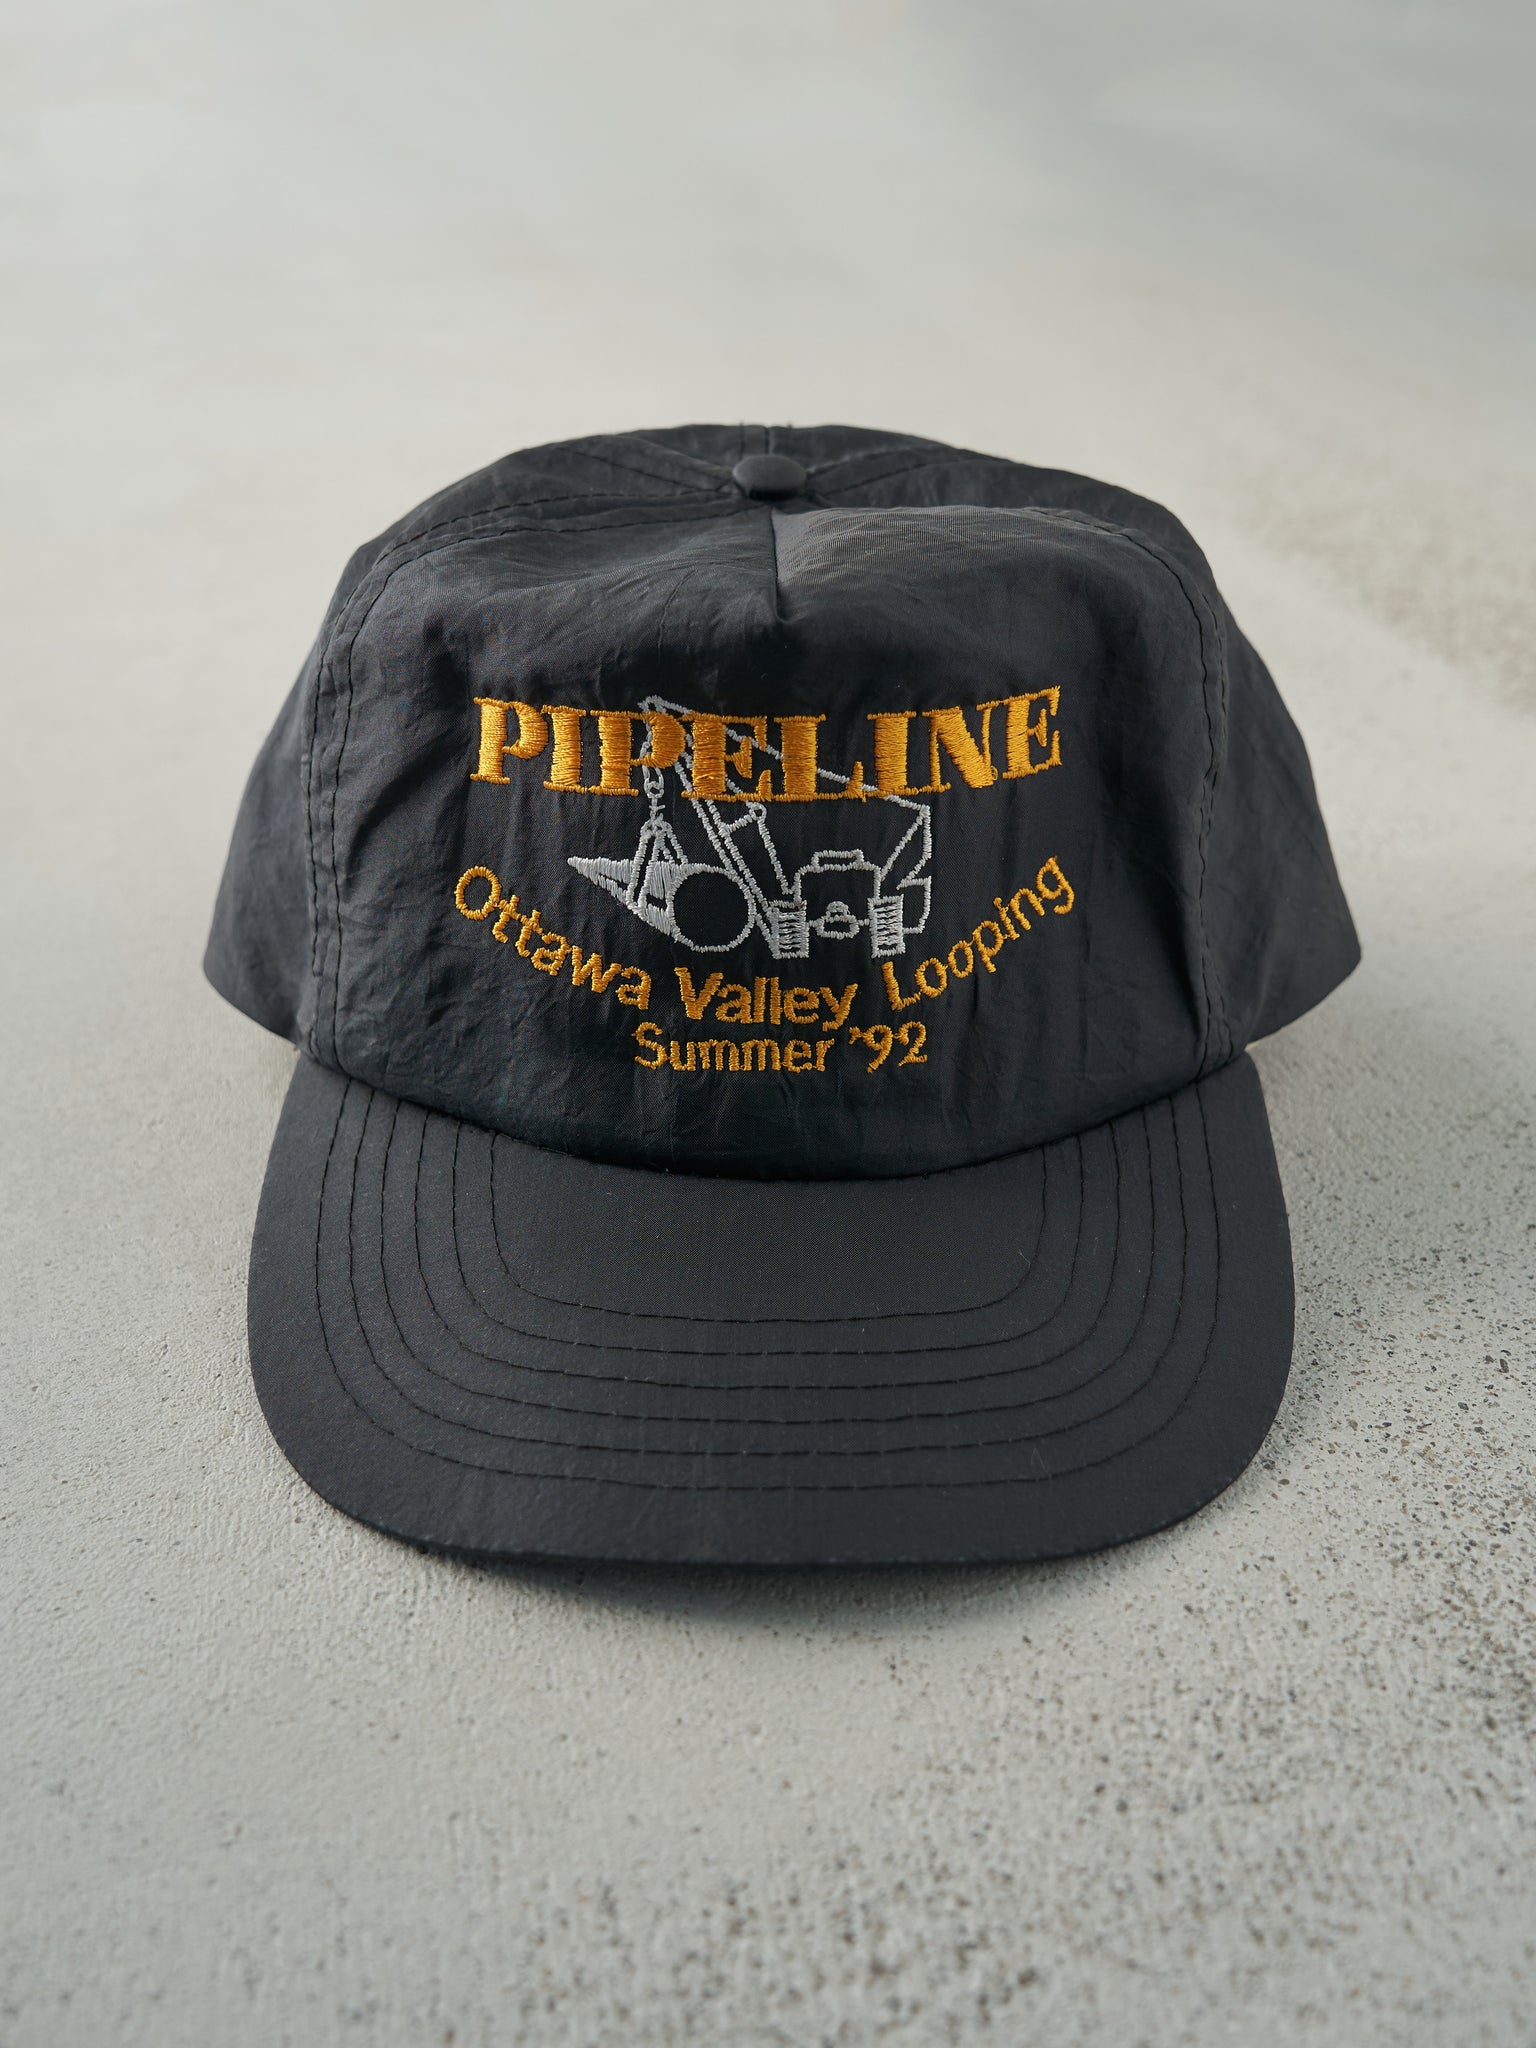 Vintage 92' Black Pipeline Embroidered Nylon Snapback Hat